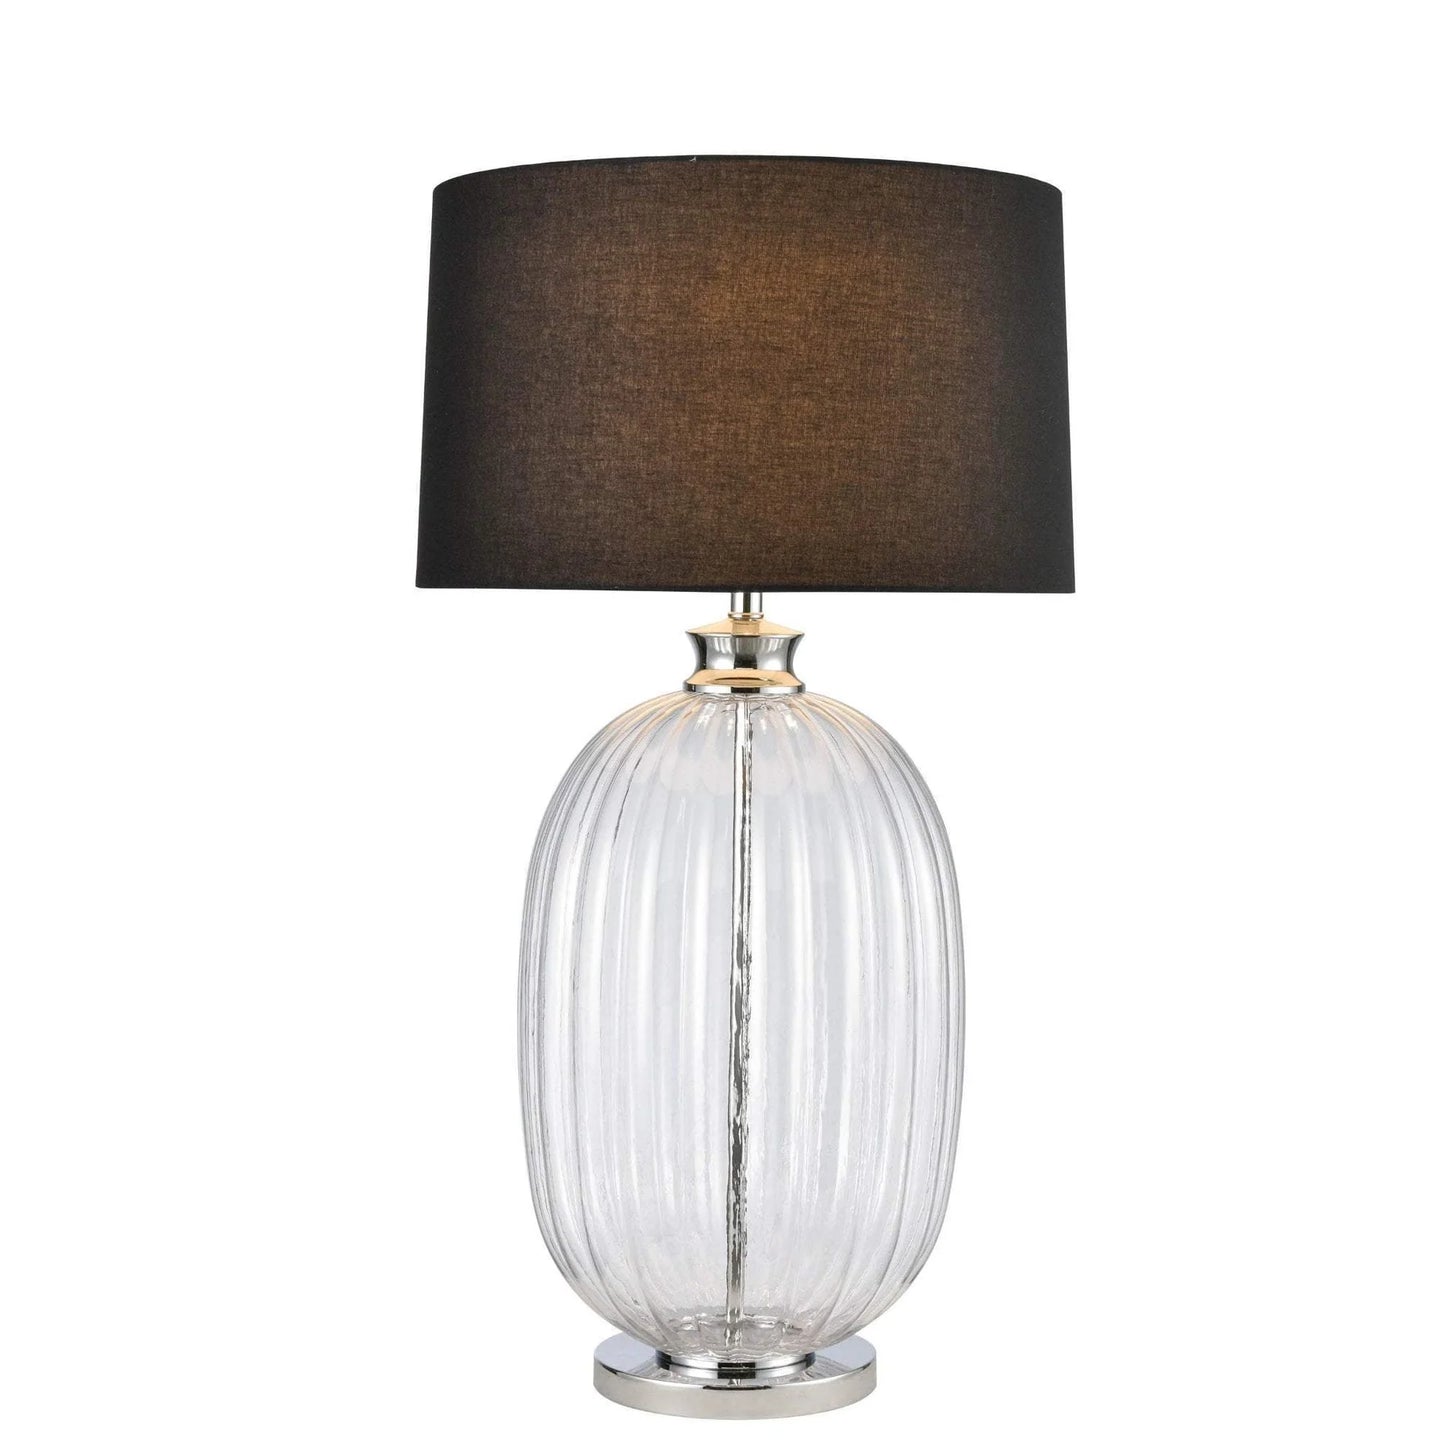 Lamp - Glass Kingsley textured